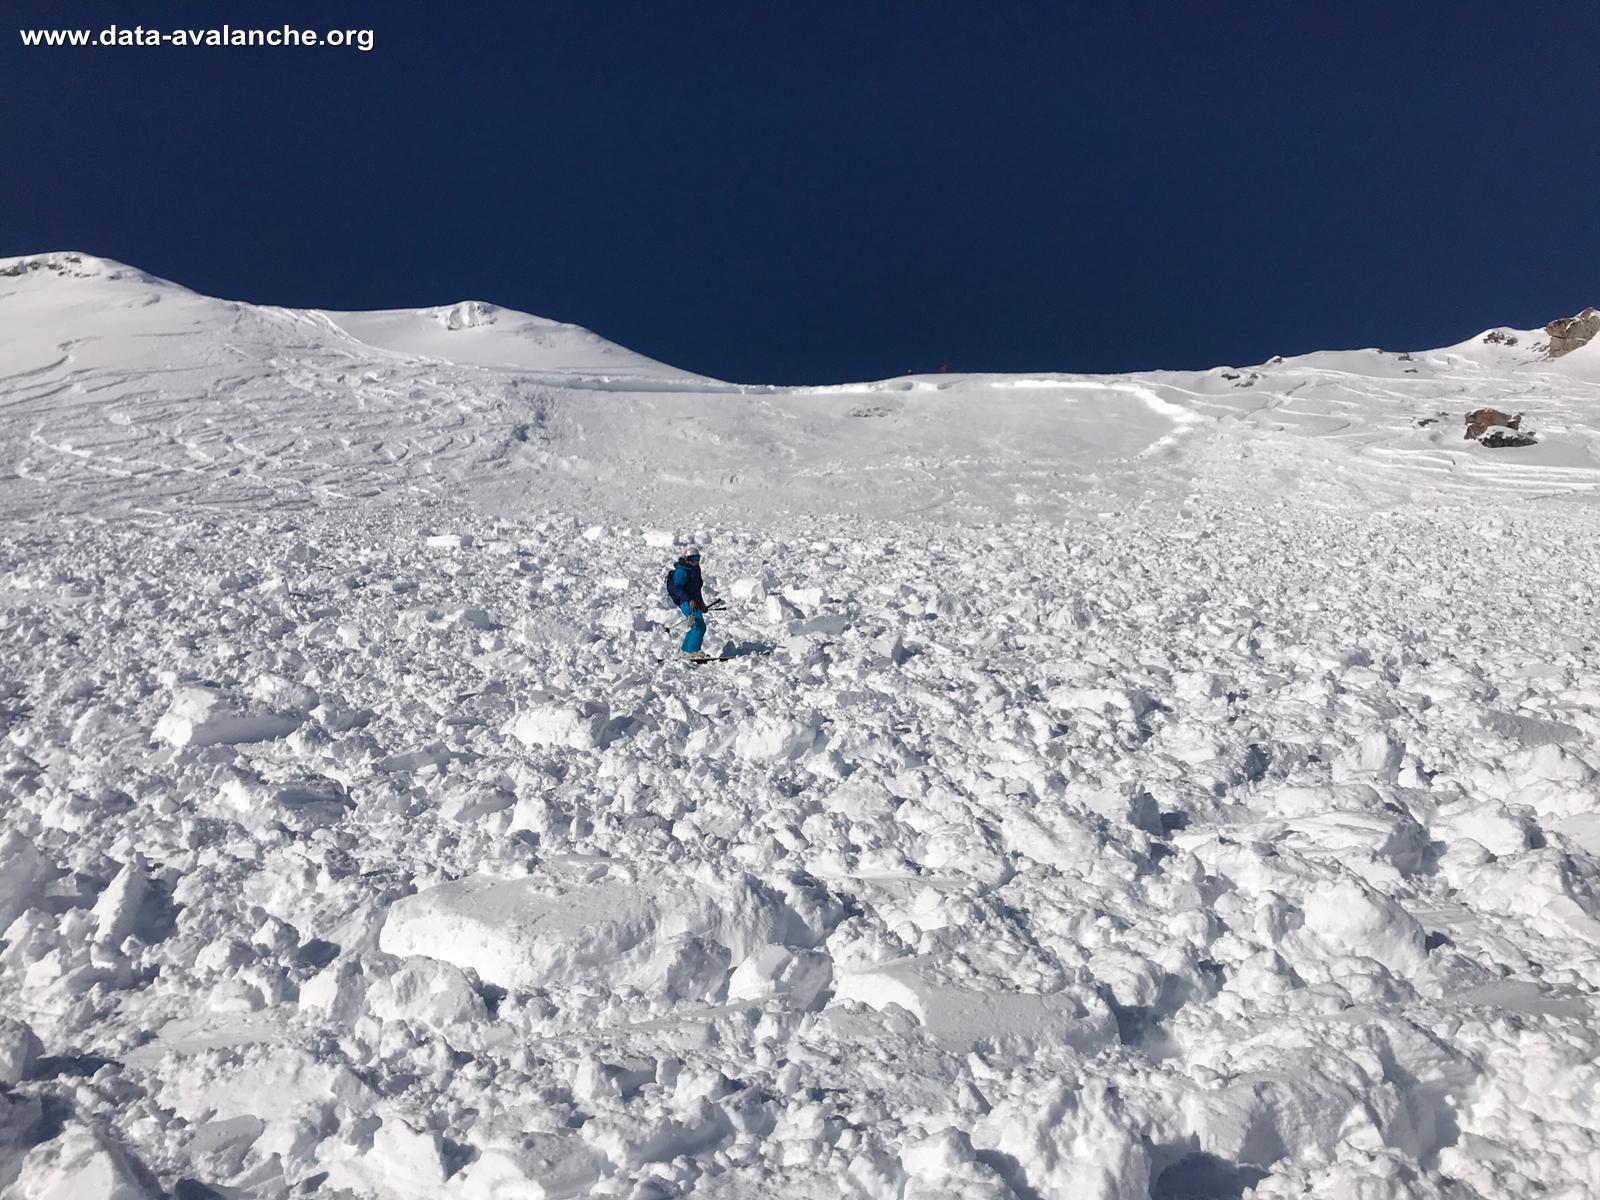 cours avalanche Valais